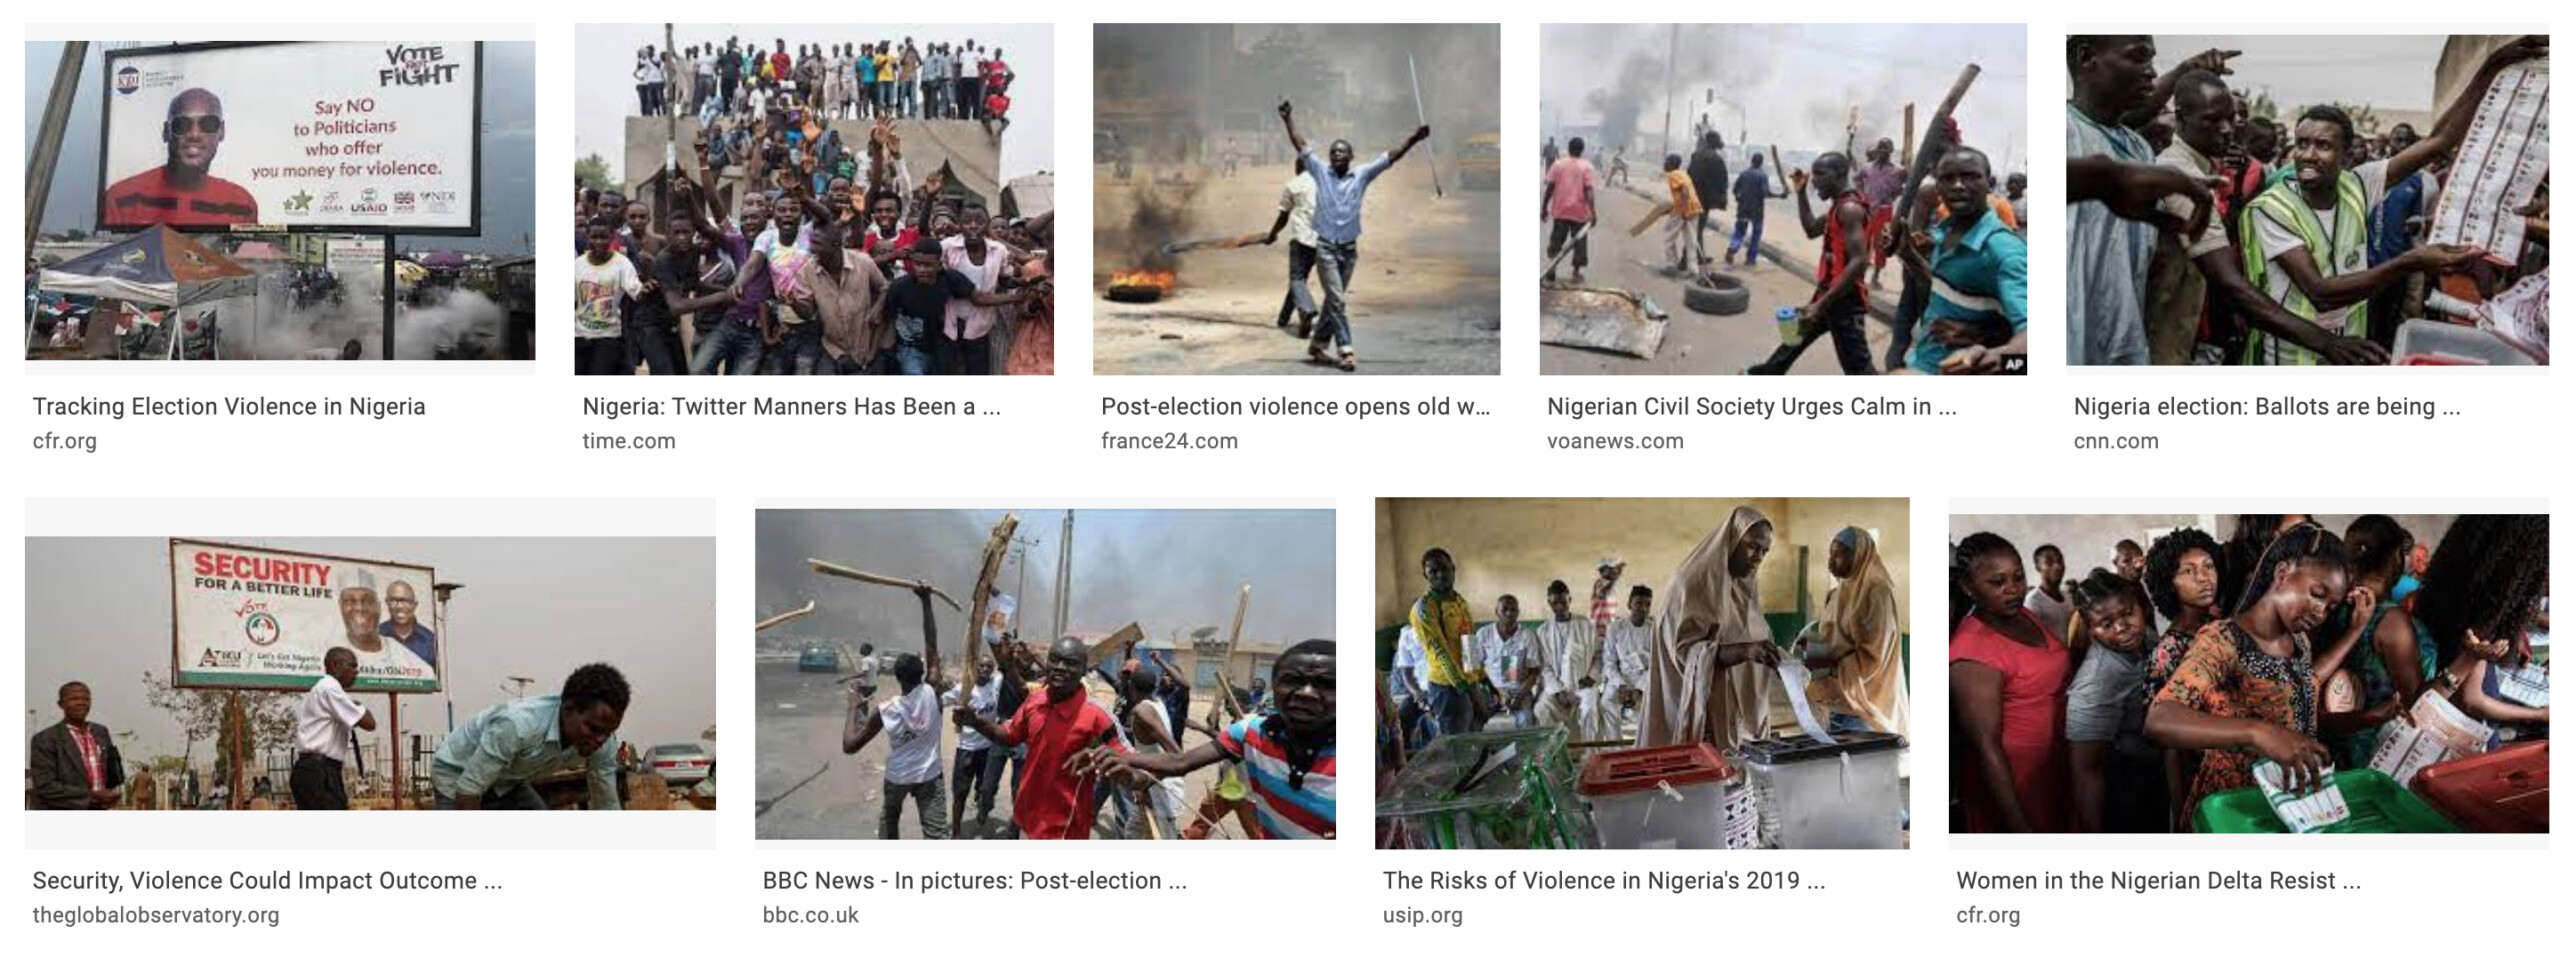 Nigeria election violence scaled